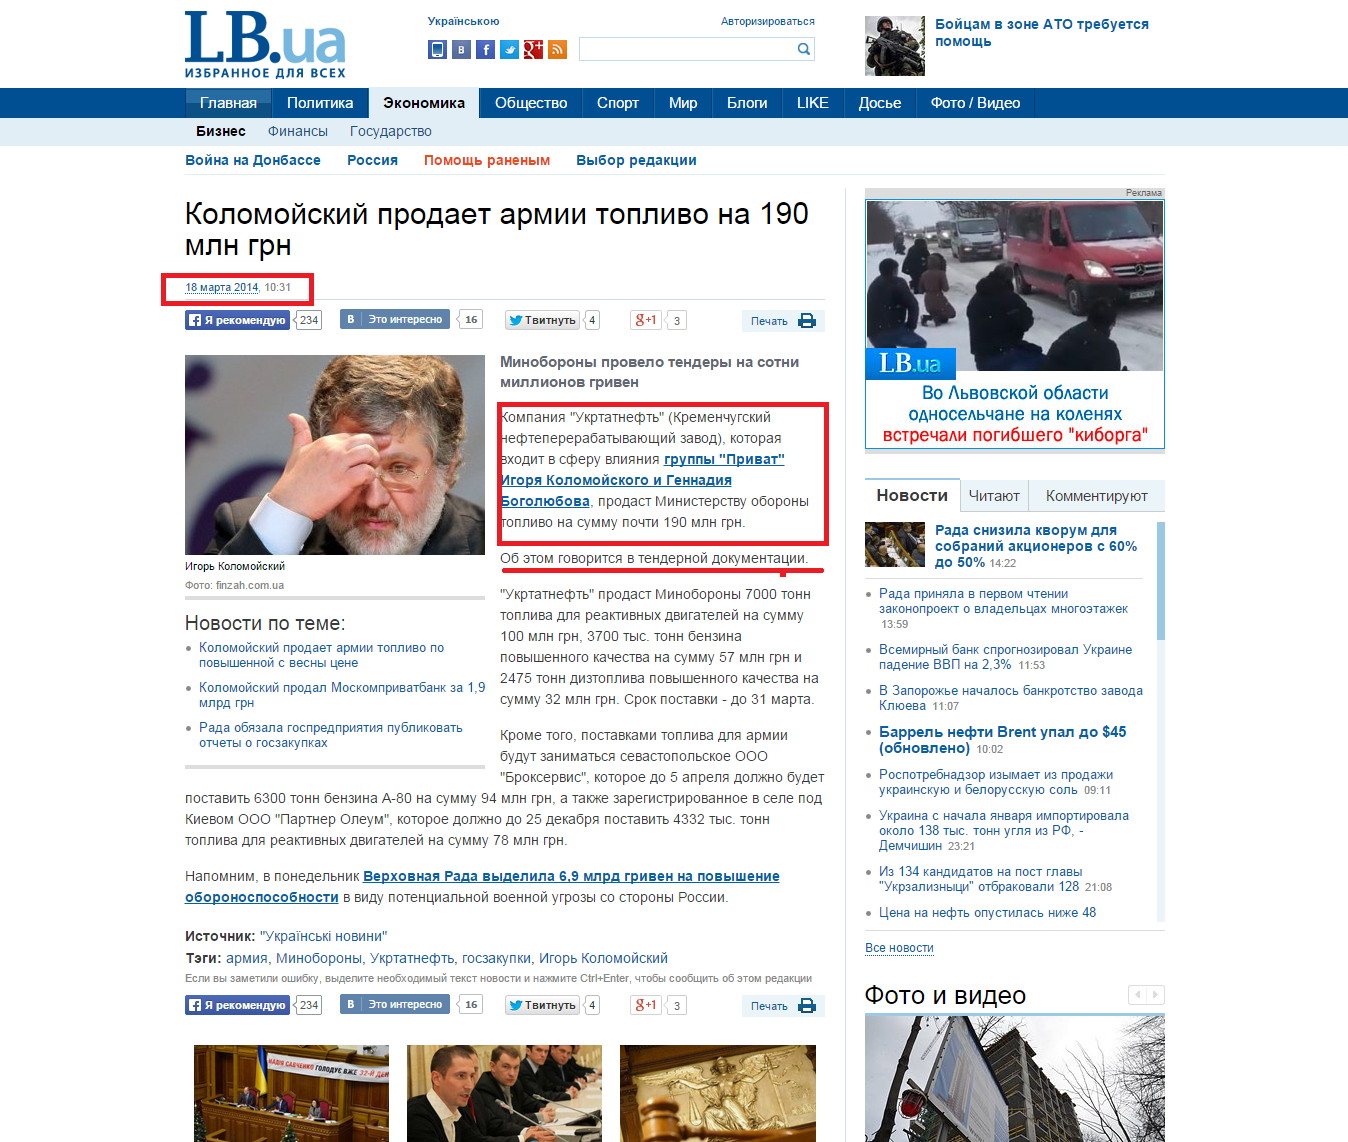 http://economics.lb.ua/business/2014/03/18/259776_kolomoyskiy_prodaet_armii_toplivo.html